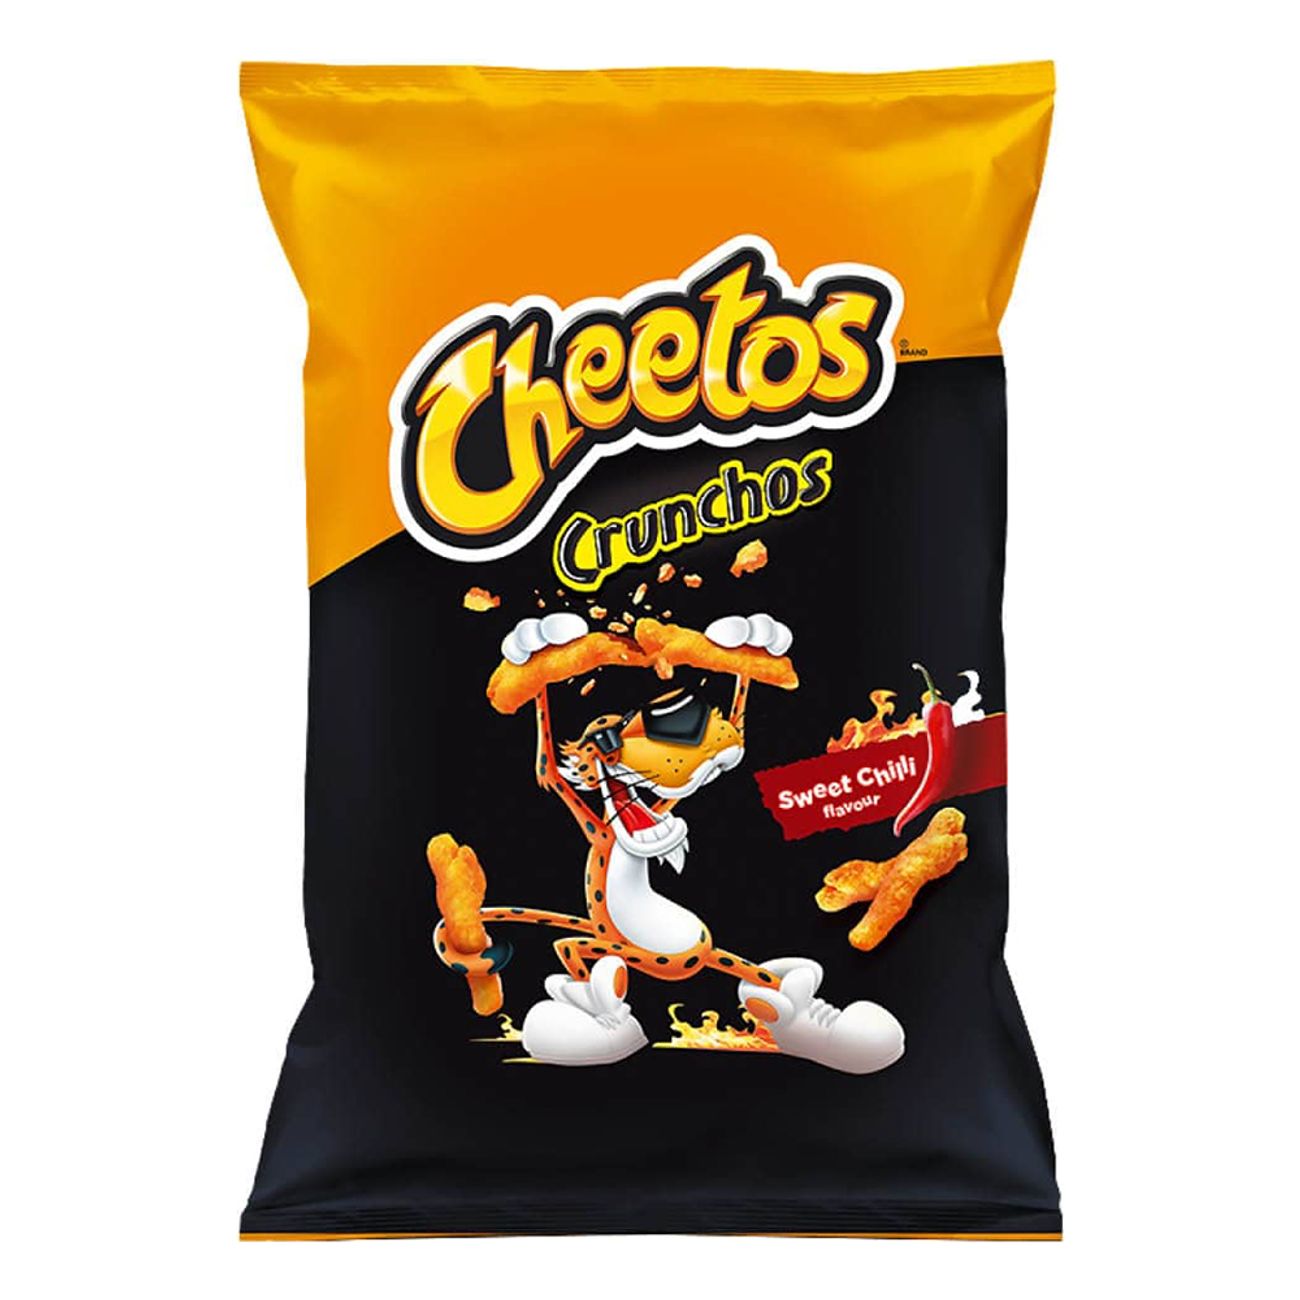 cheetos-crunchos-sweet-chili-78125-2